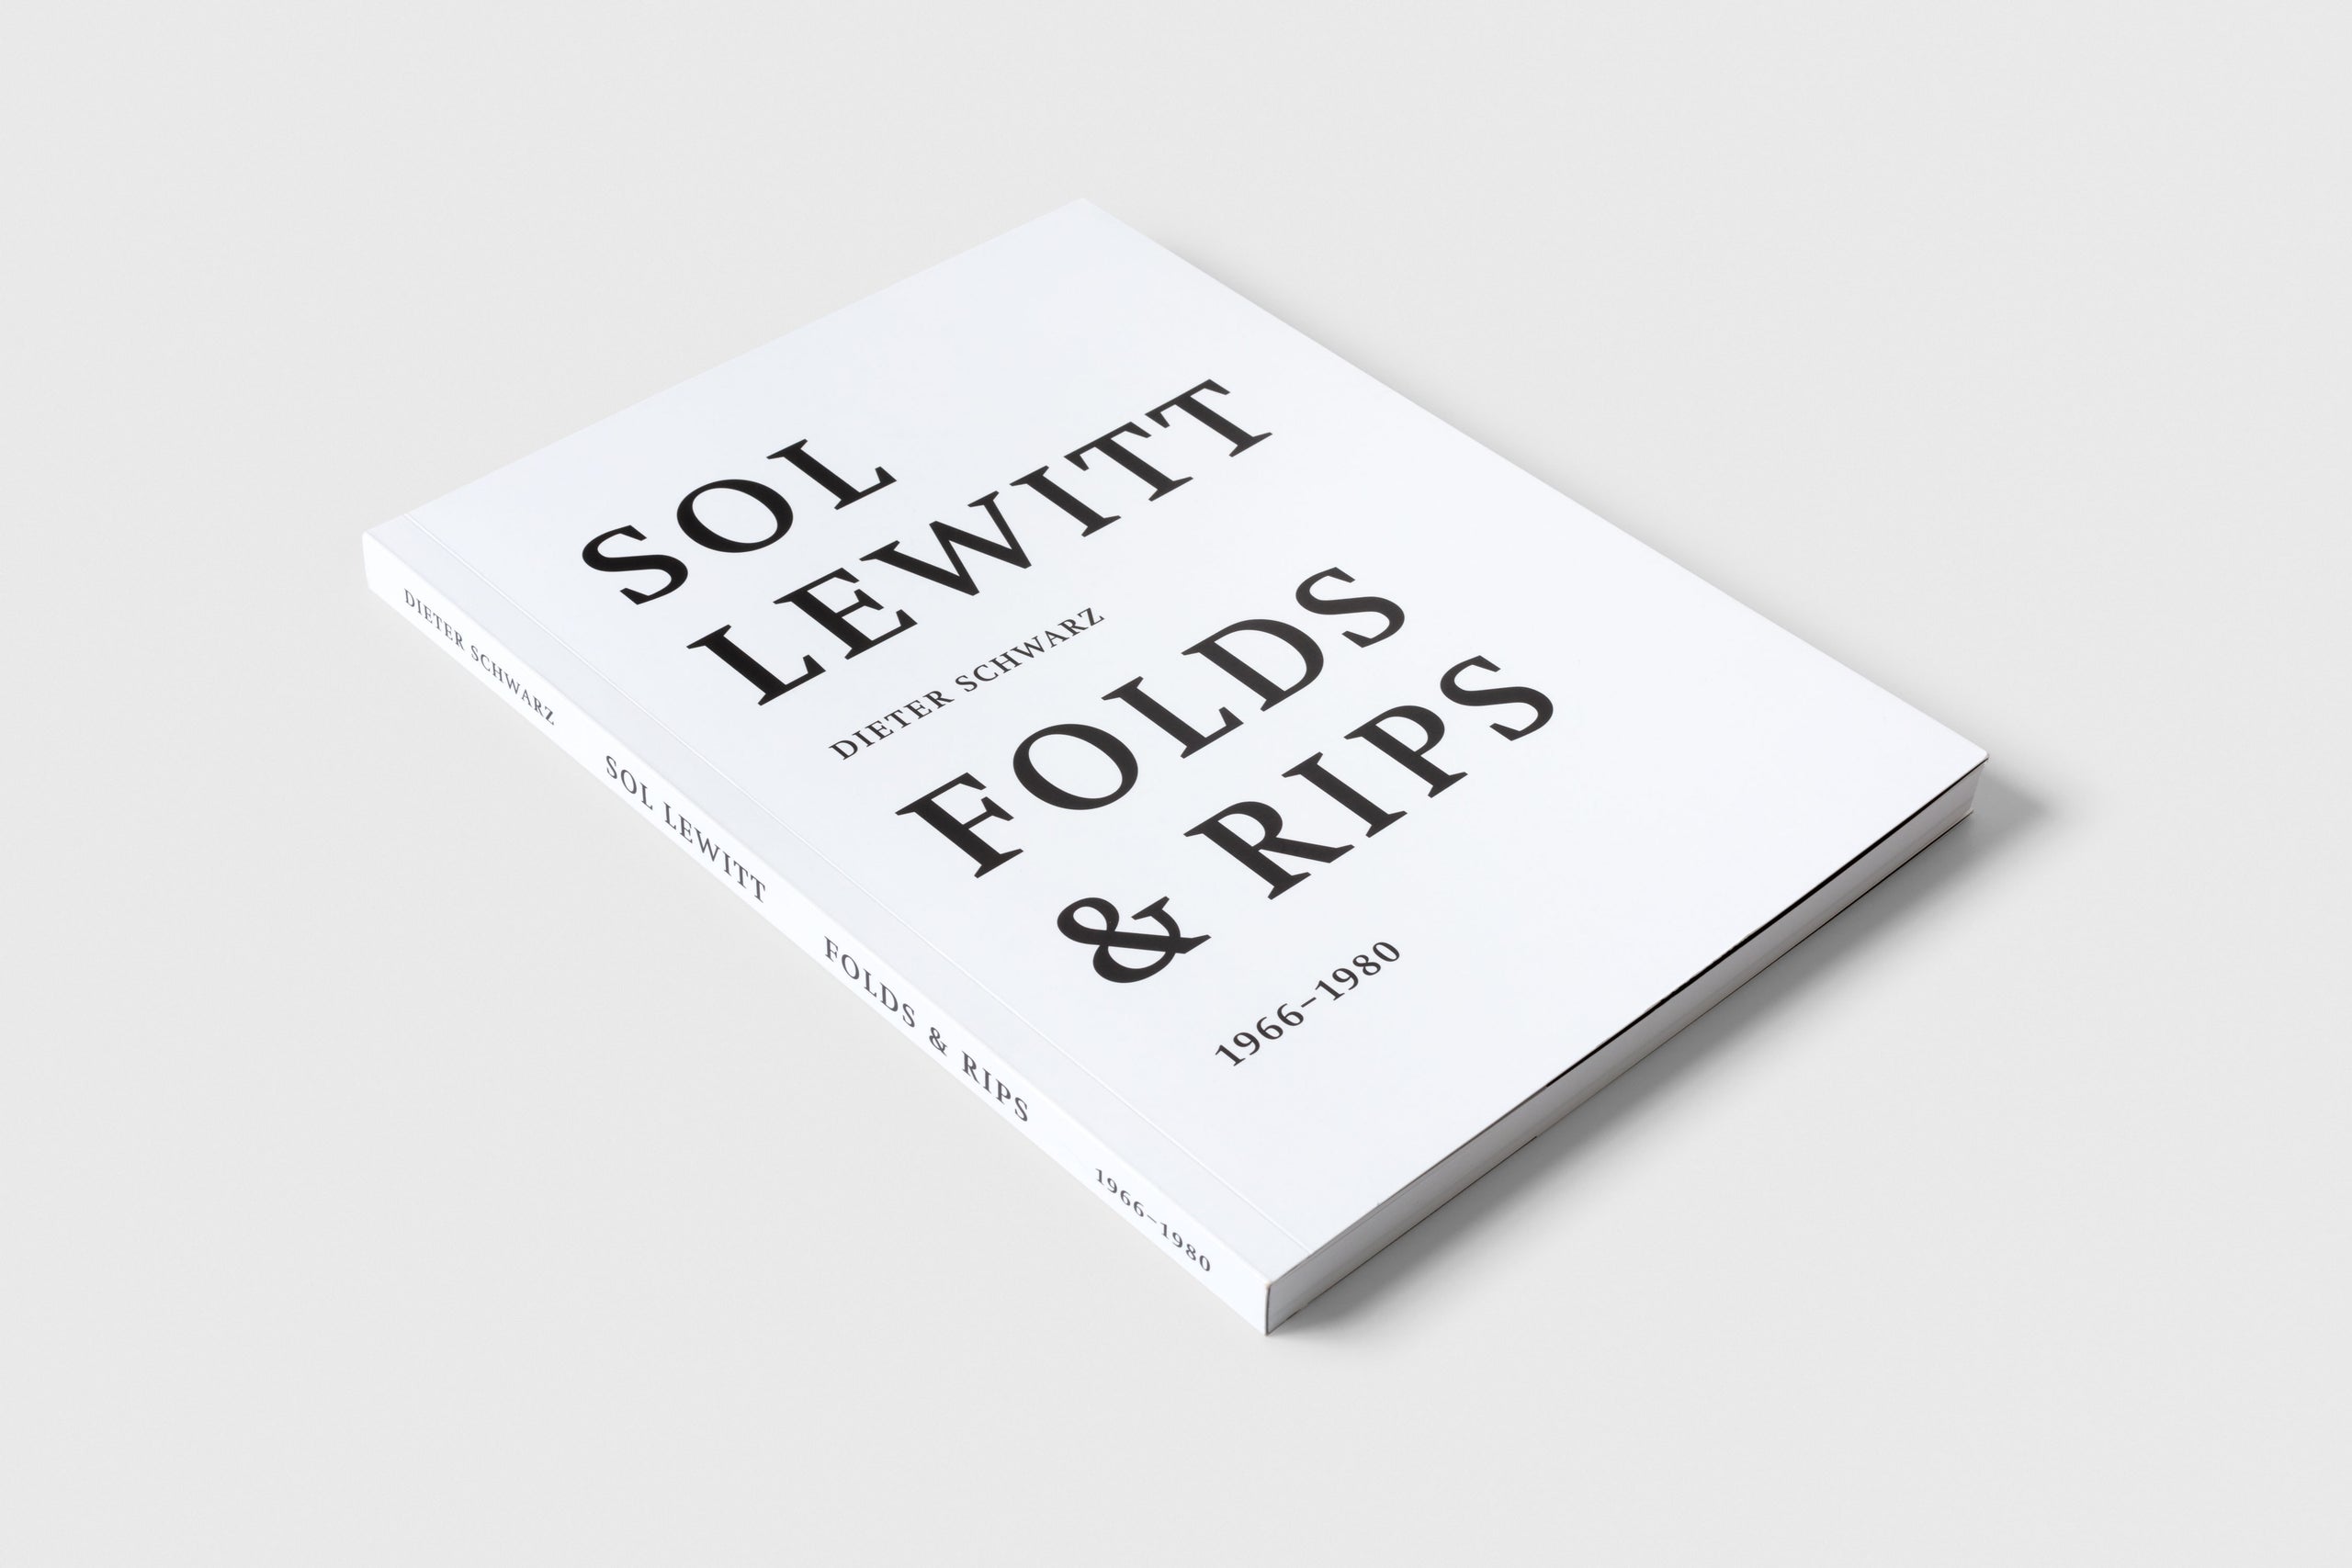 Sol LeWitt: Folds & Rips: 1966-1980